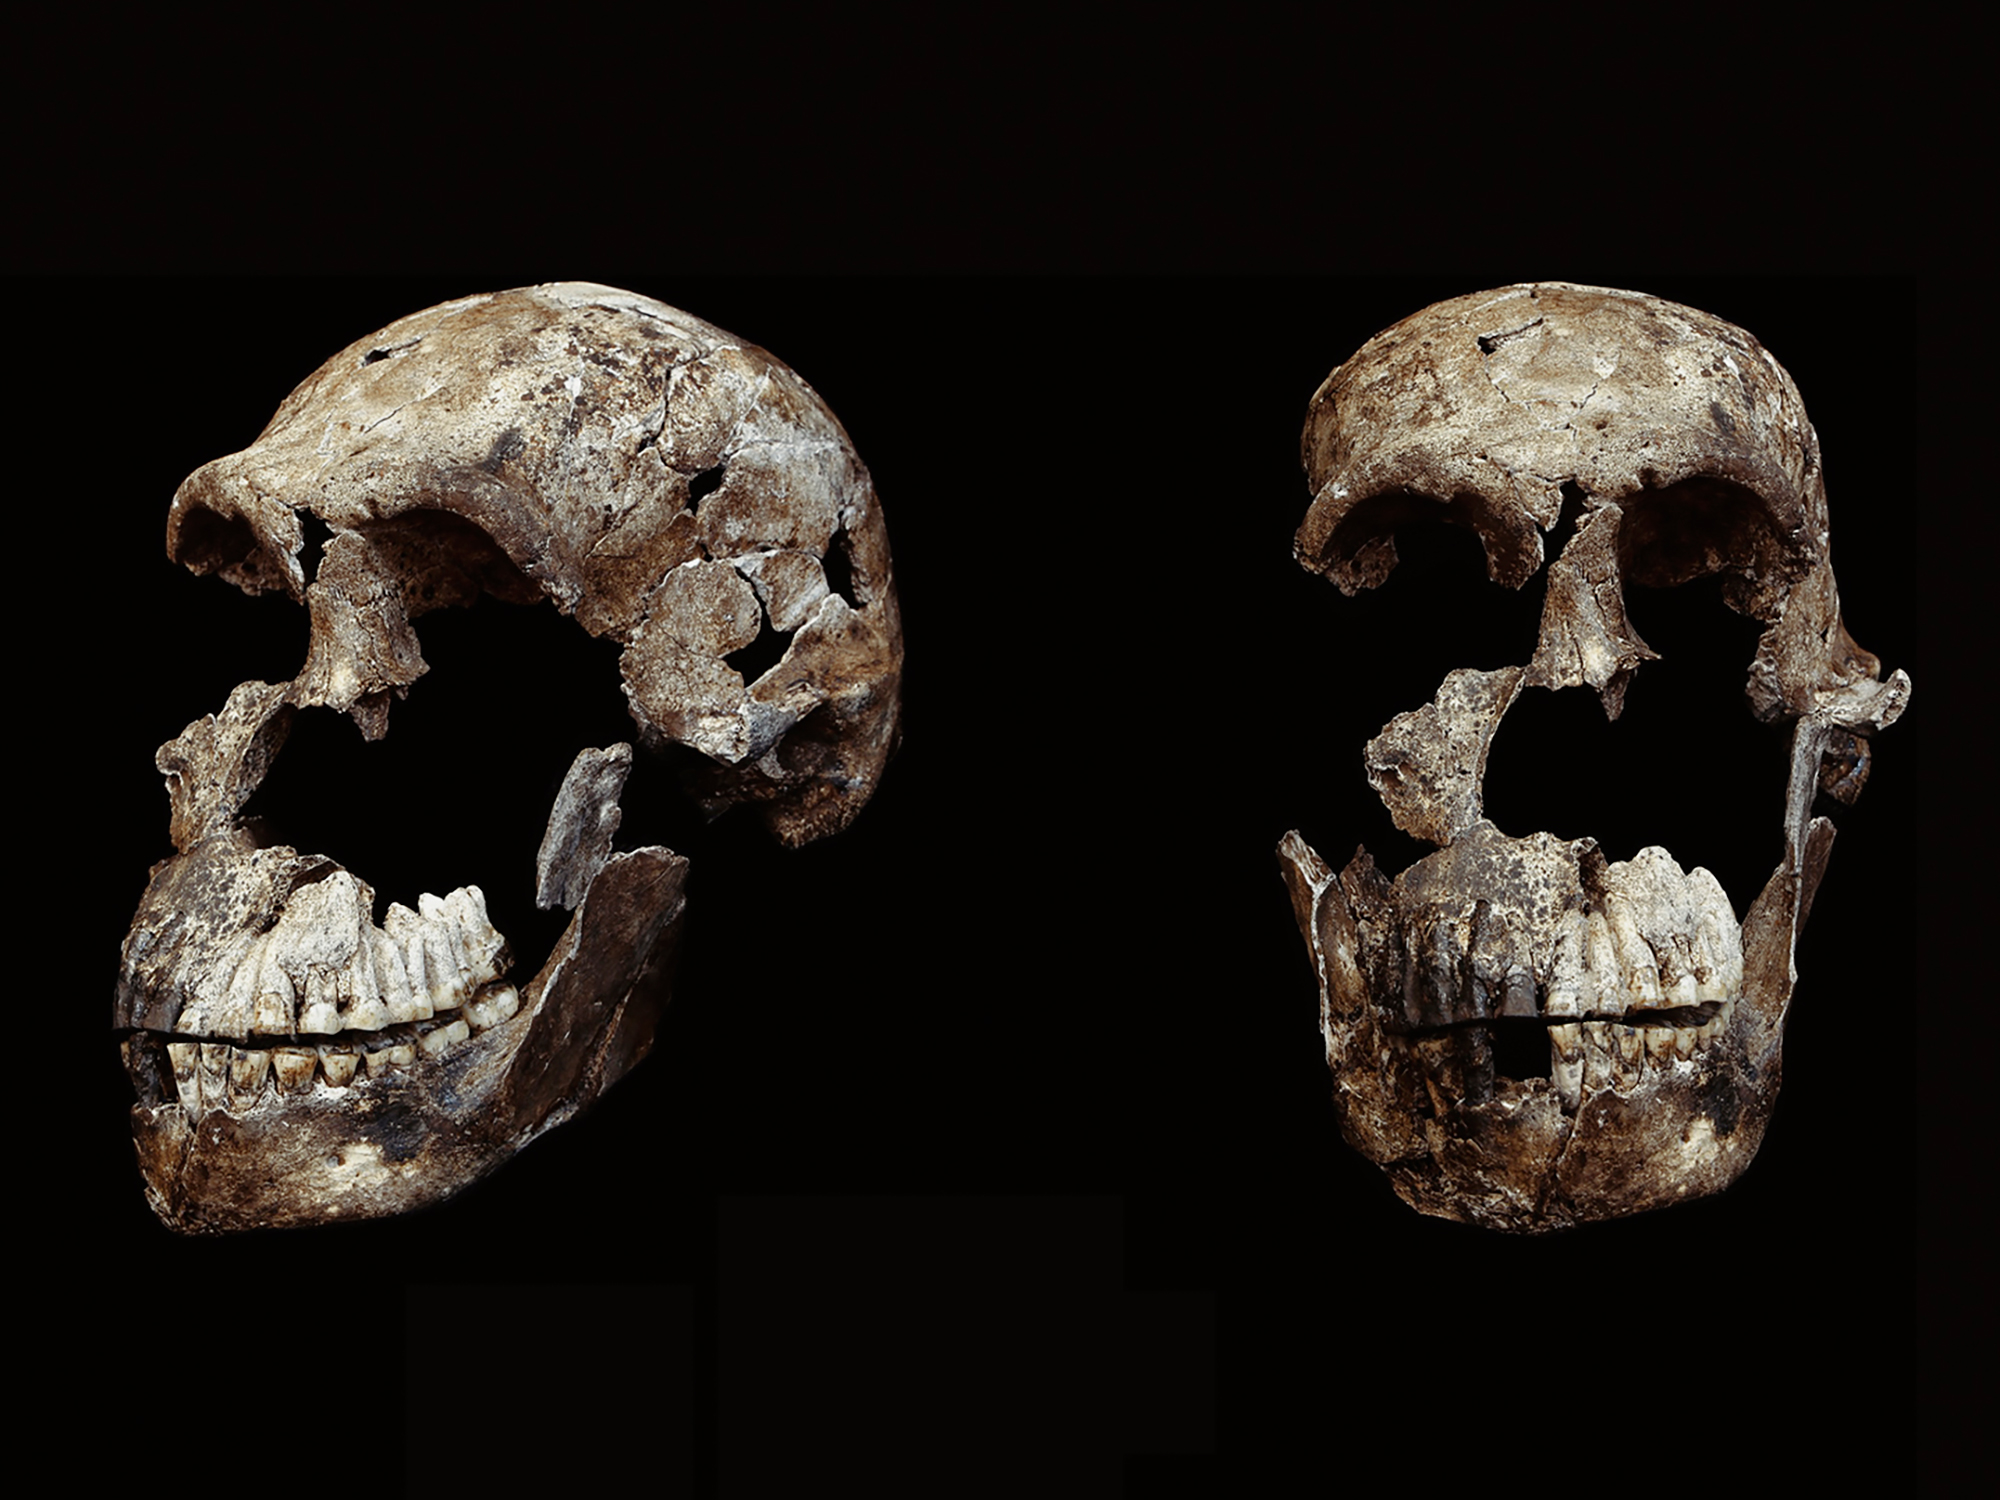 Homo naledi discovered in the Rising Star Cave